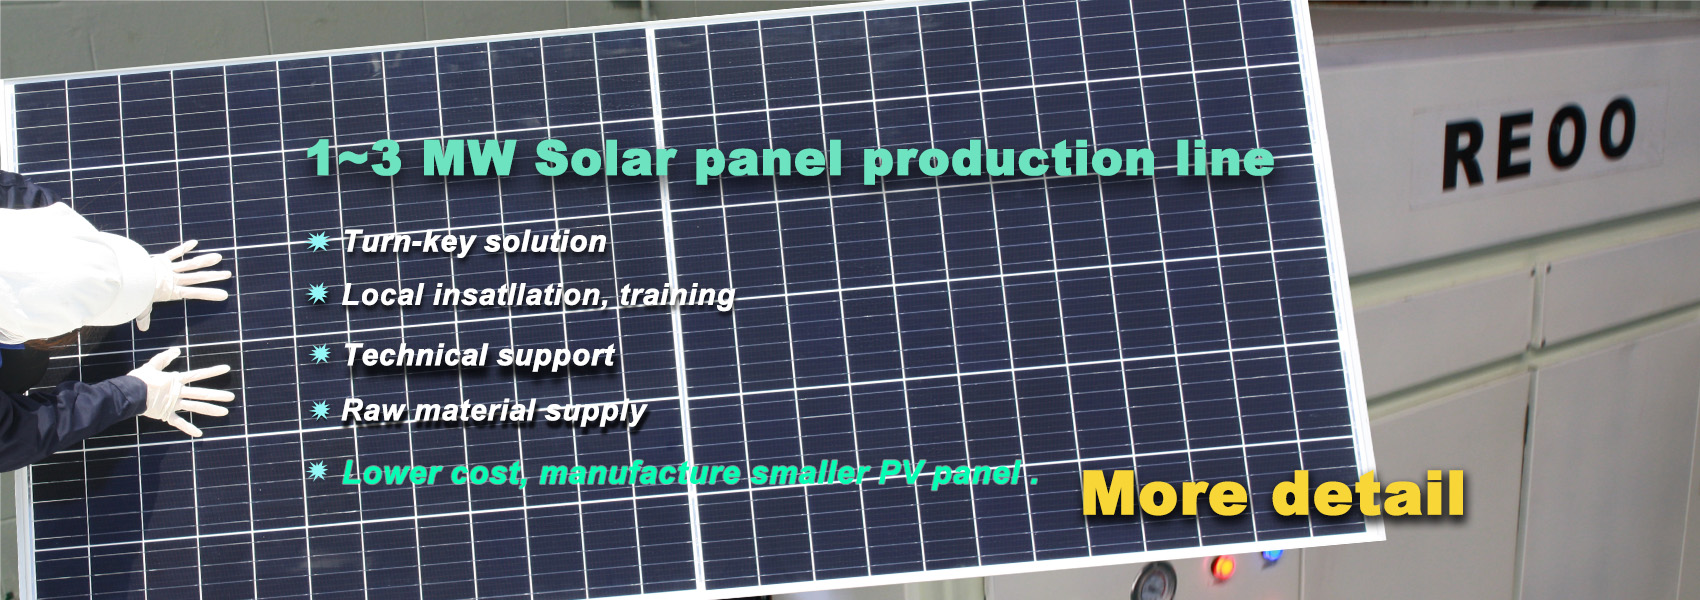 1 MW solar panel production line